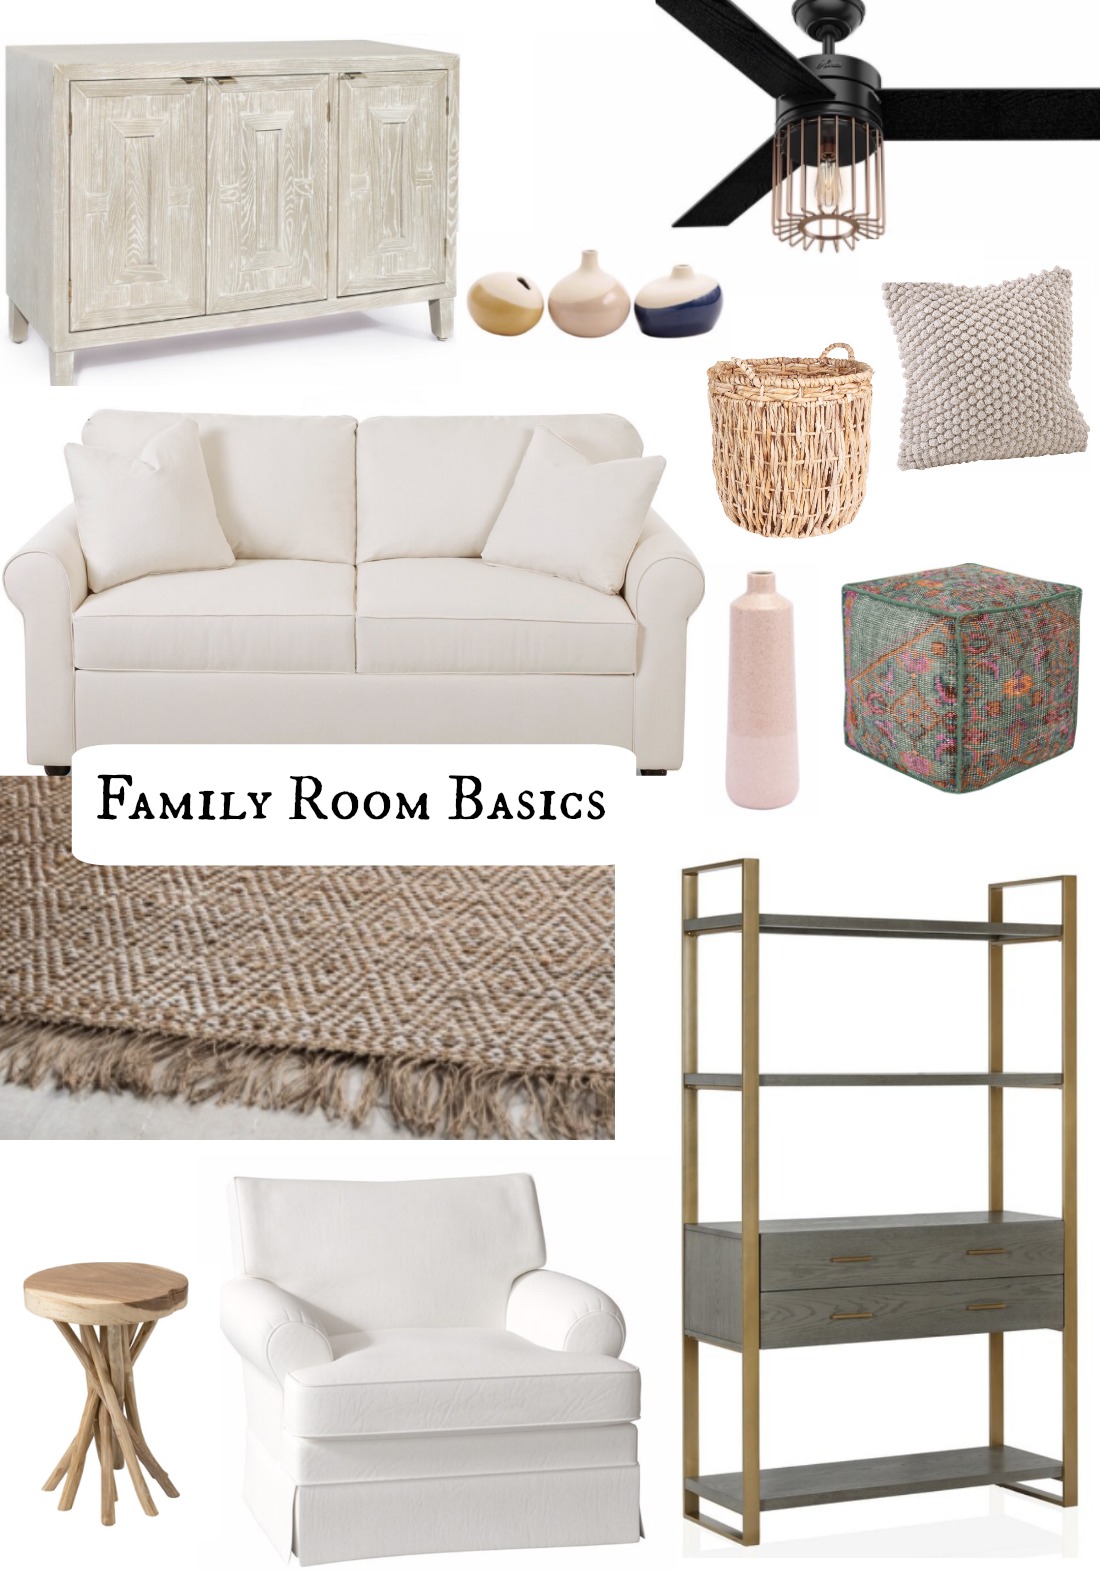 Family Room Basics